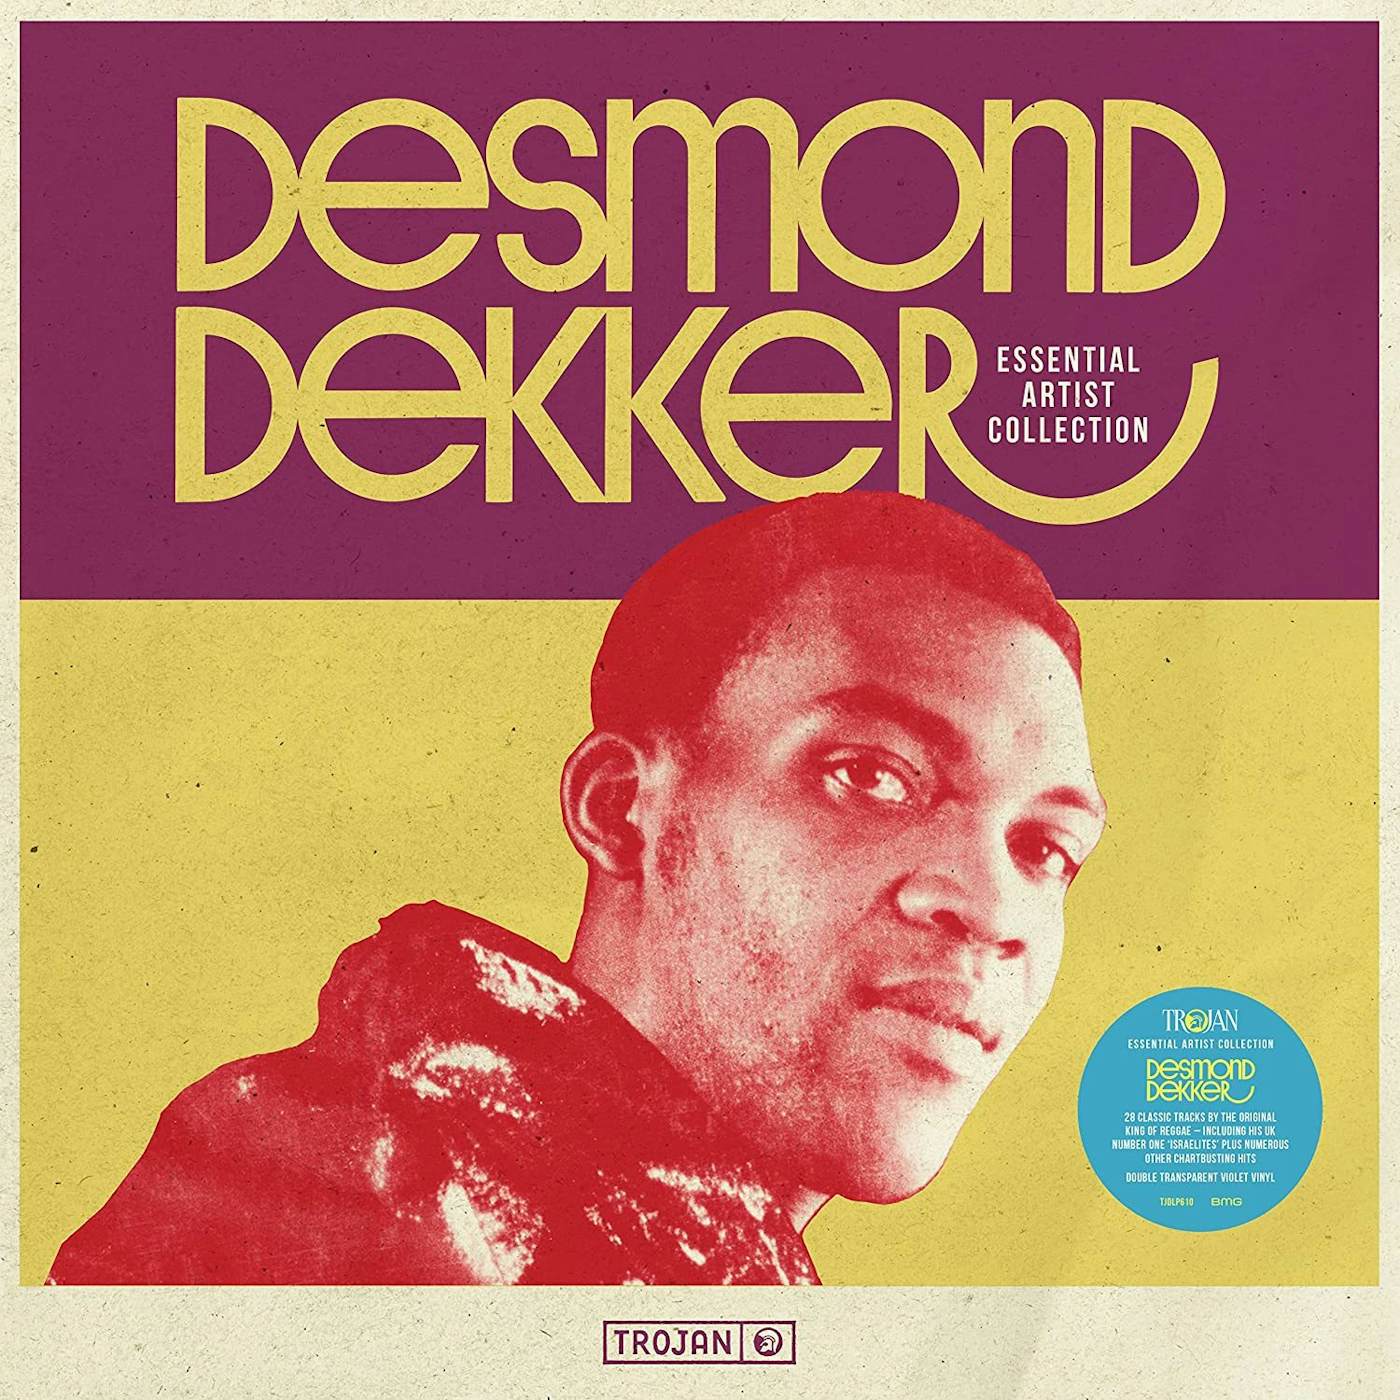 Desmond Dekker Essential Artist Collection Vinyl Record